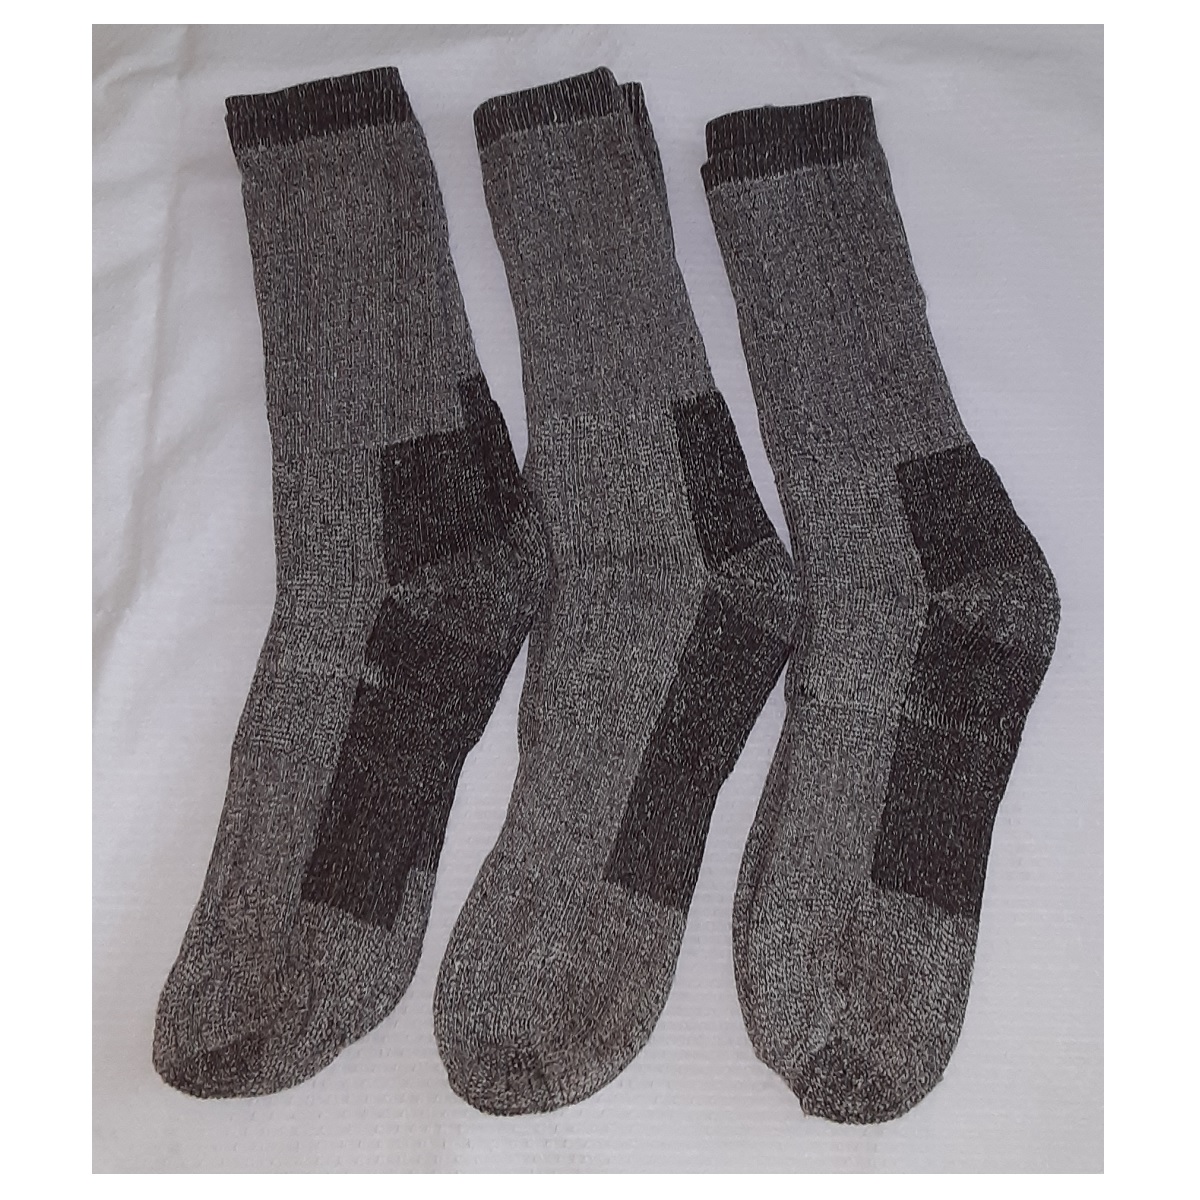 Thick Merino wool socks - Black and Gray - Premium Quality Woolen Socks